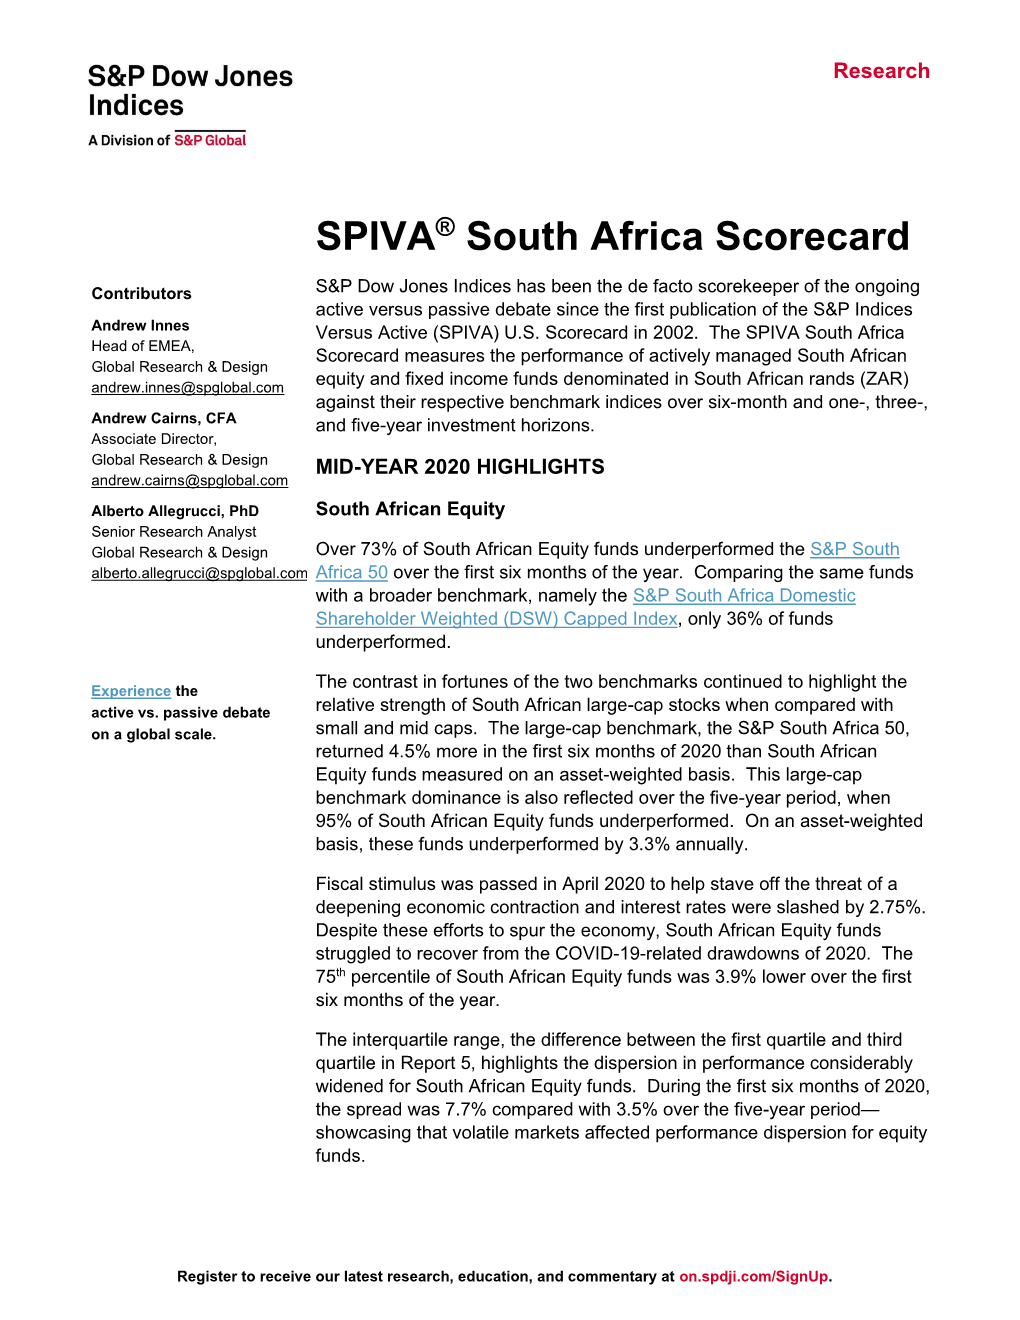 SPIVA South Africa Mid-Year 2020 Scorecard